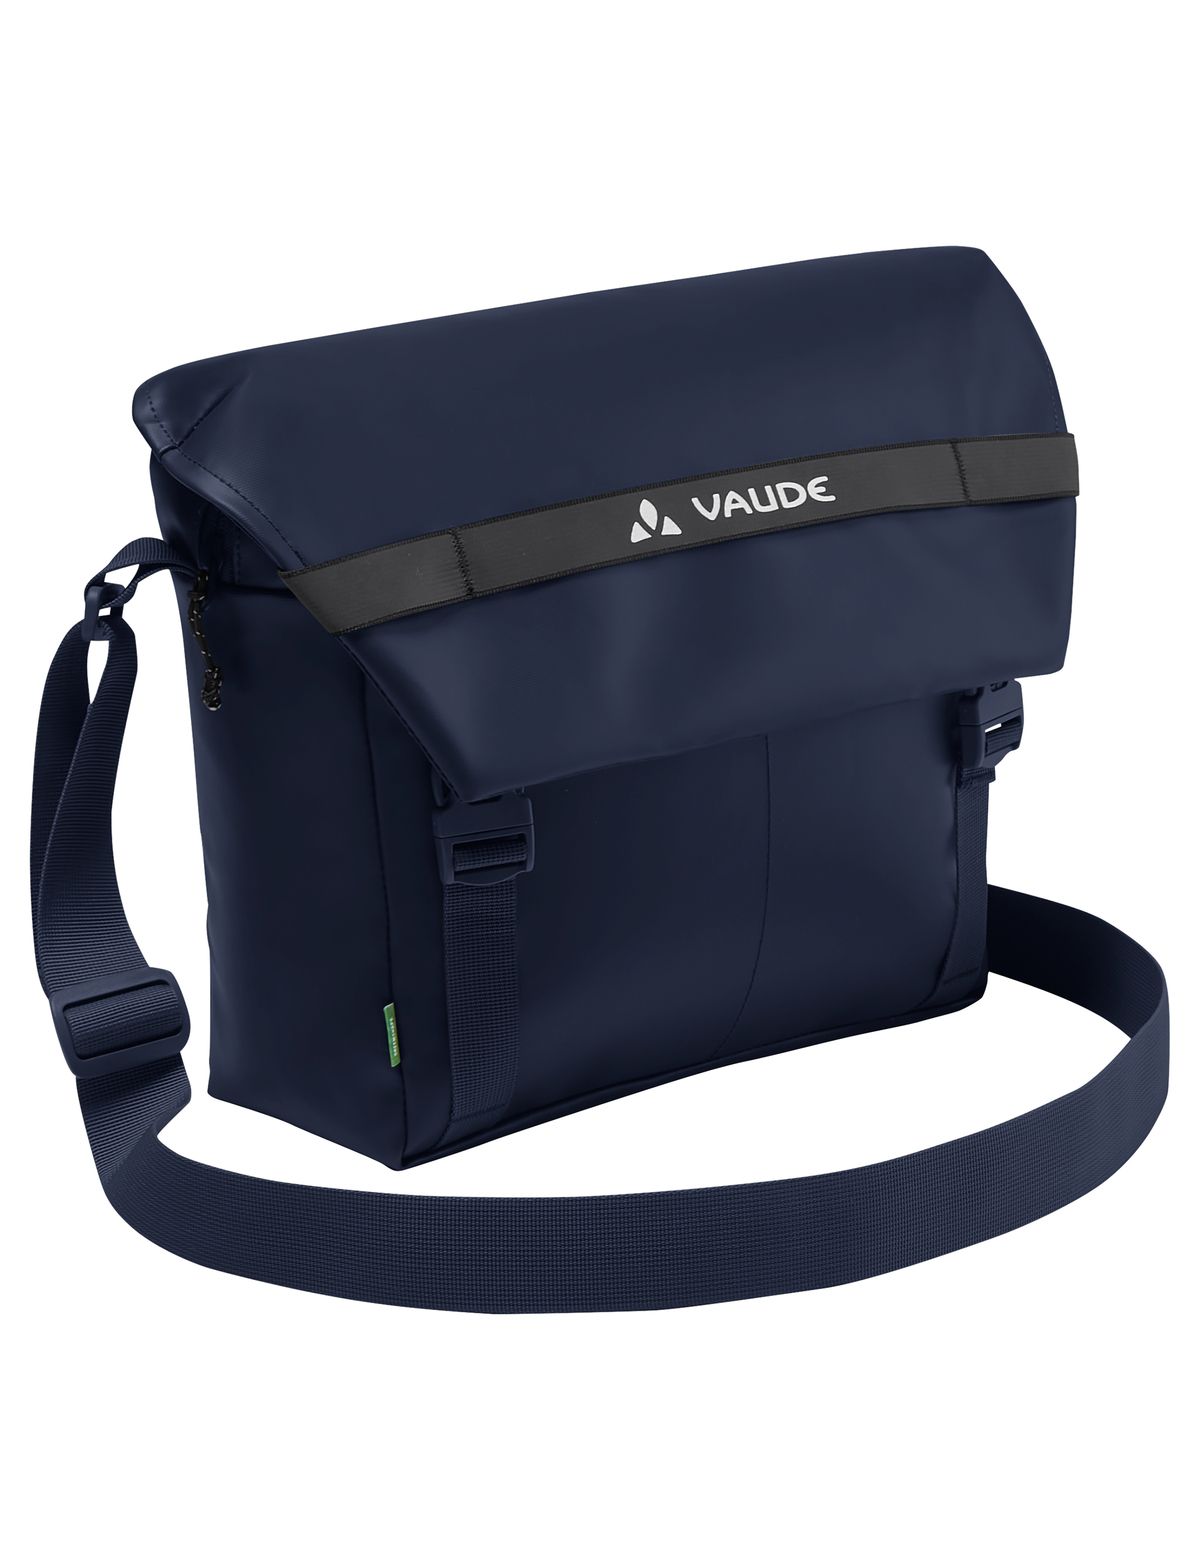 Mineo Messenger 9 Businesstasche von Vaude - Laure Bags and Travel